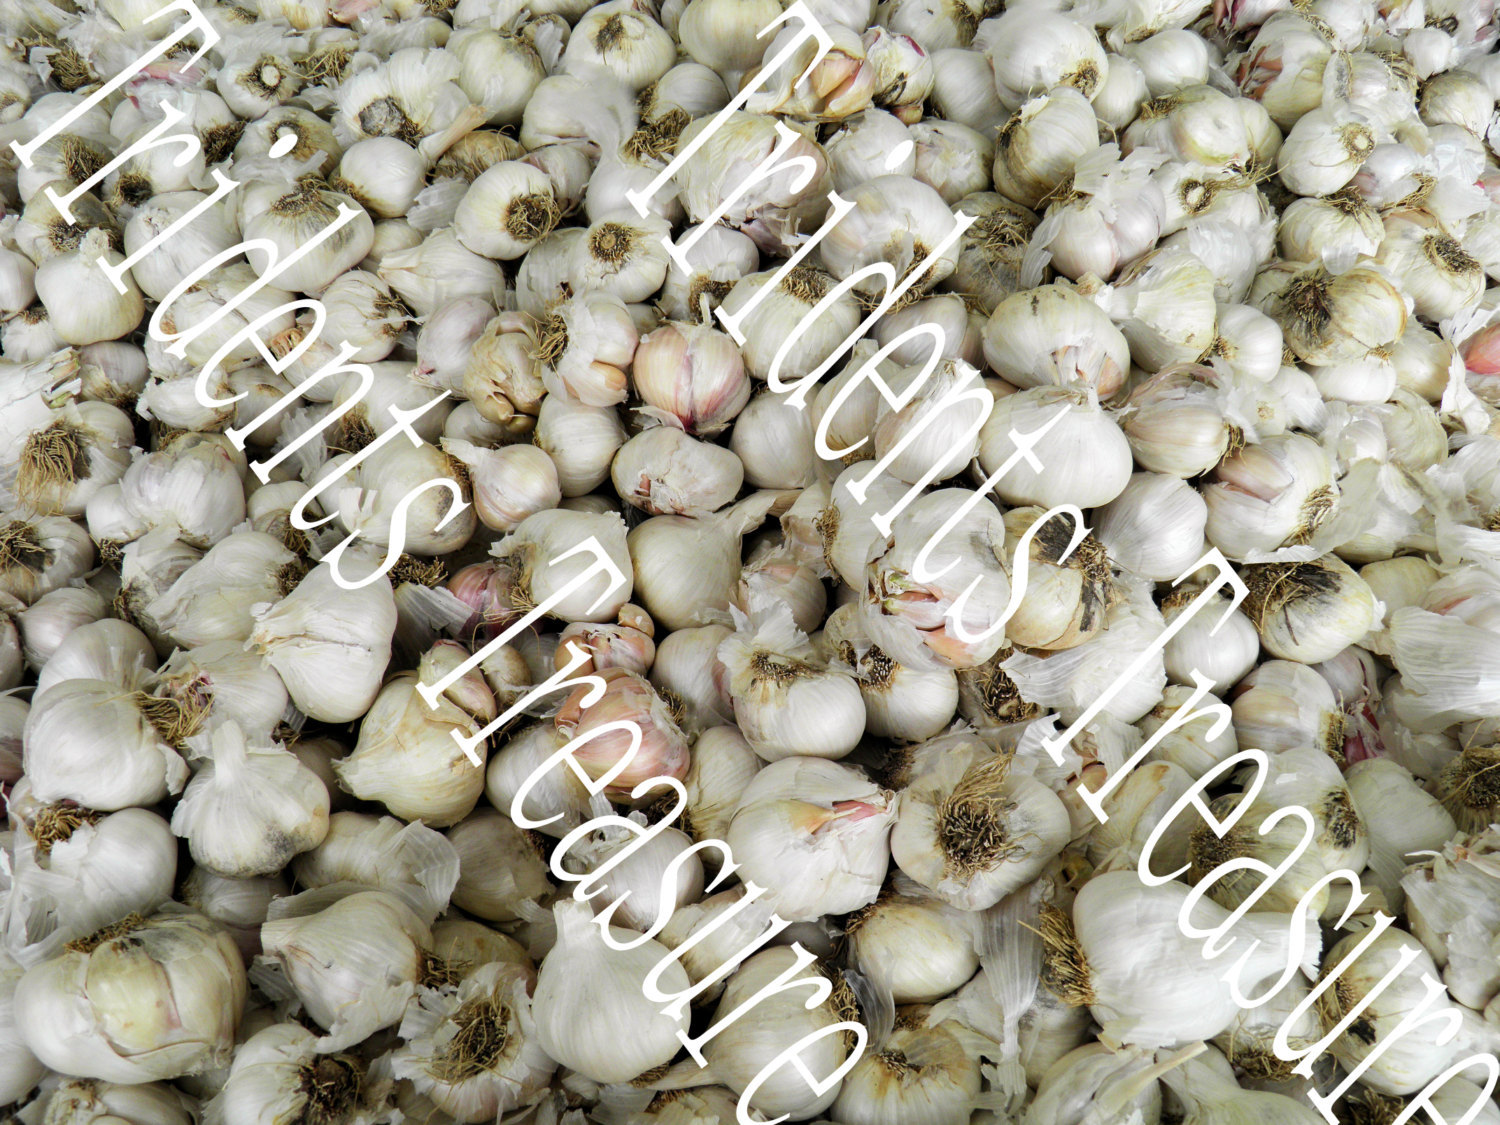 Primary image for Garlic Wall Art - Warholesque Wall Art - Digital Food Art - Photography - Kitche